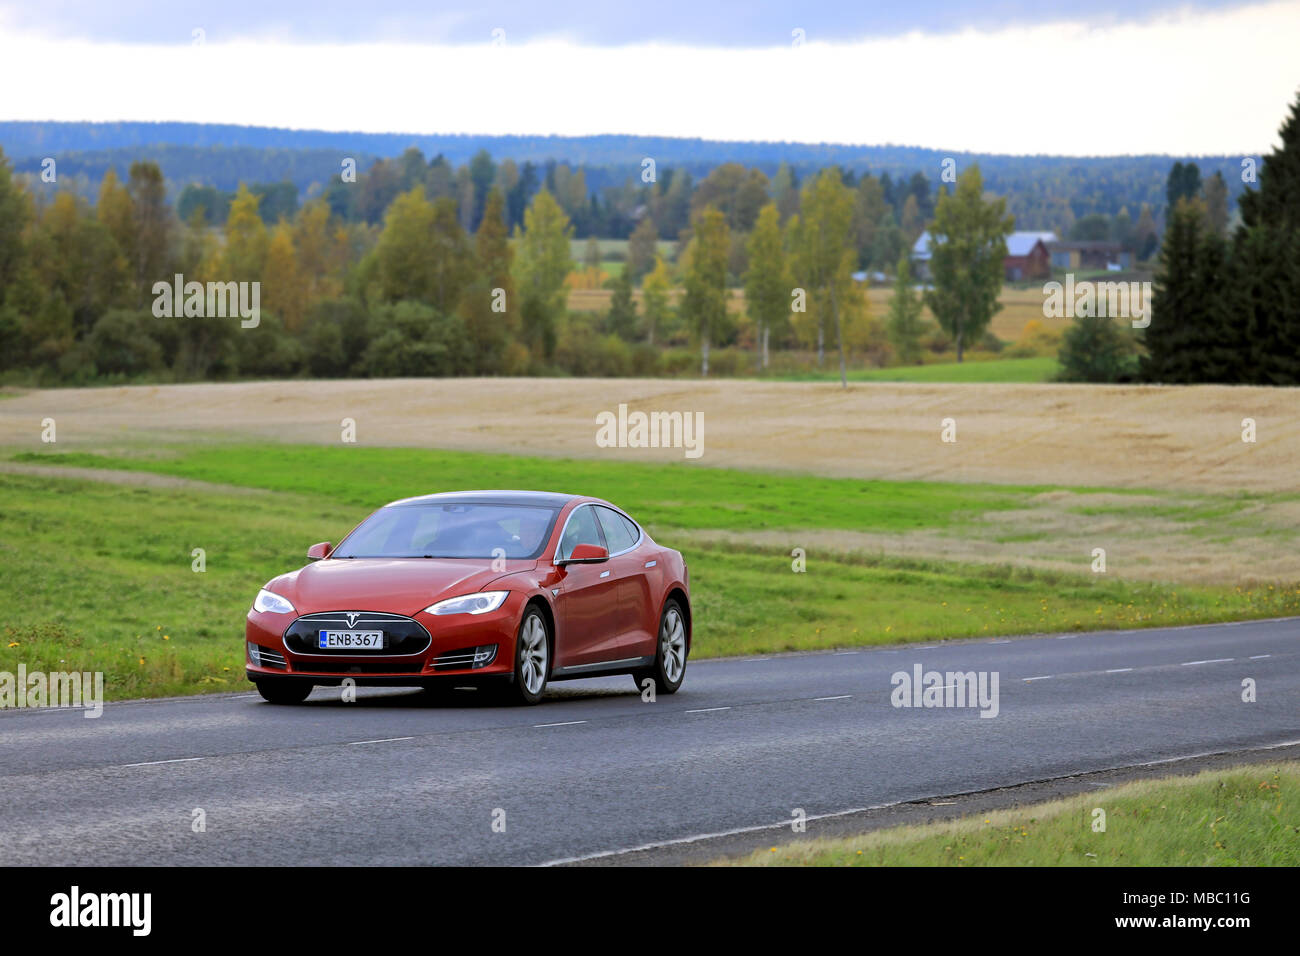 JAMSA, Finnland - 21 September 2017: Rot Tesla Model S elektrische Auto bewegt sich entlang der Scenic Highway in Finnland im Herbst. Stockfoto